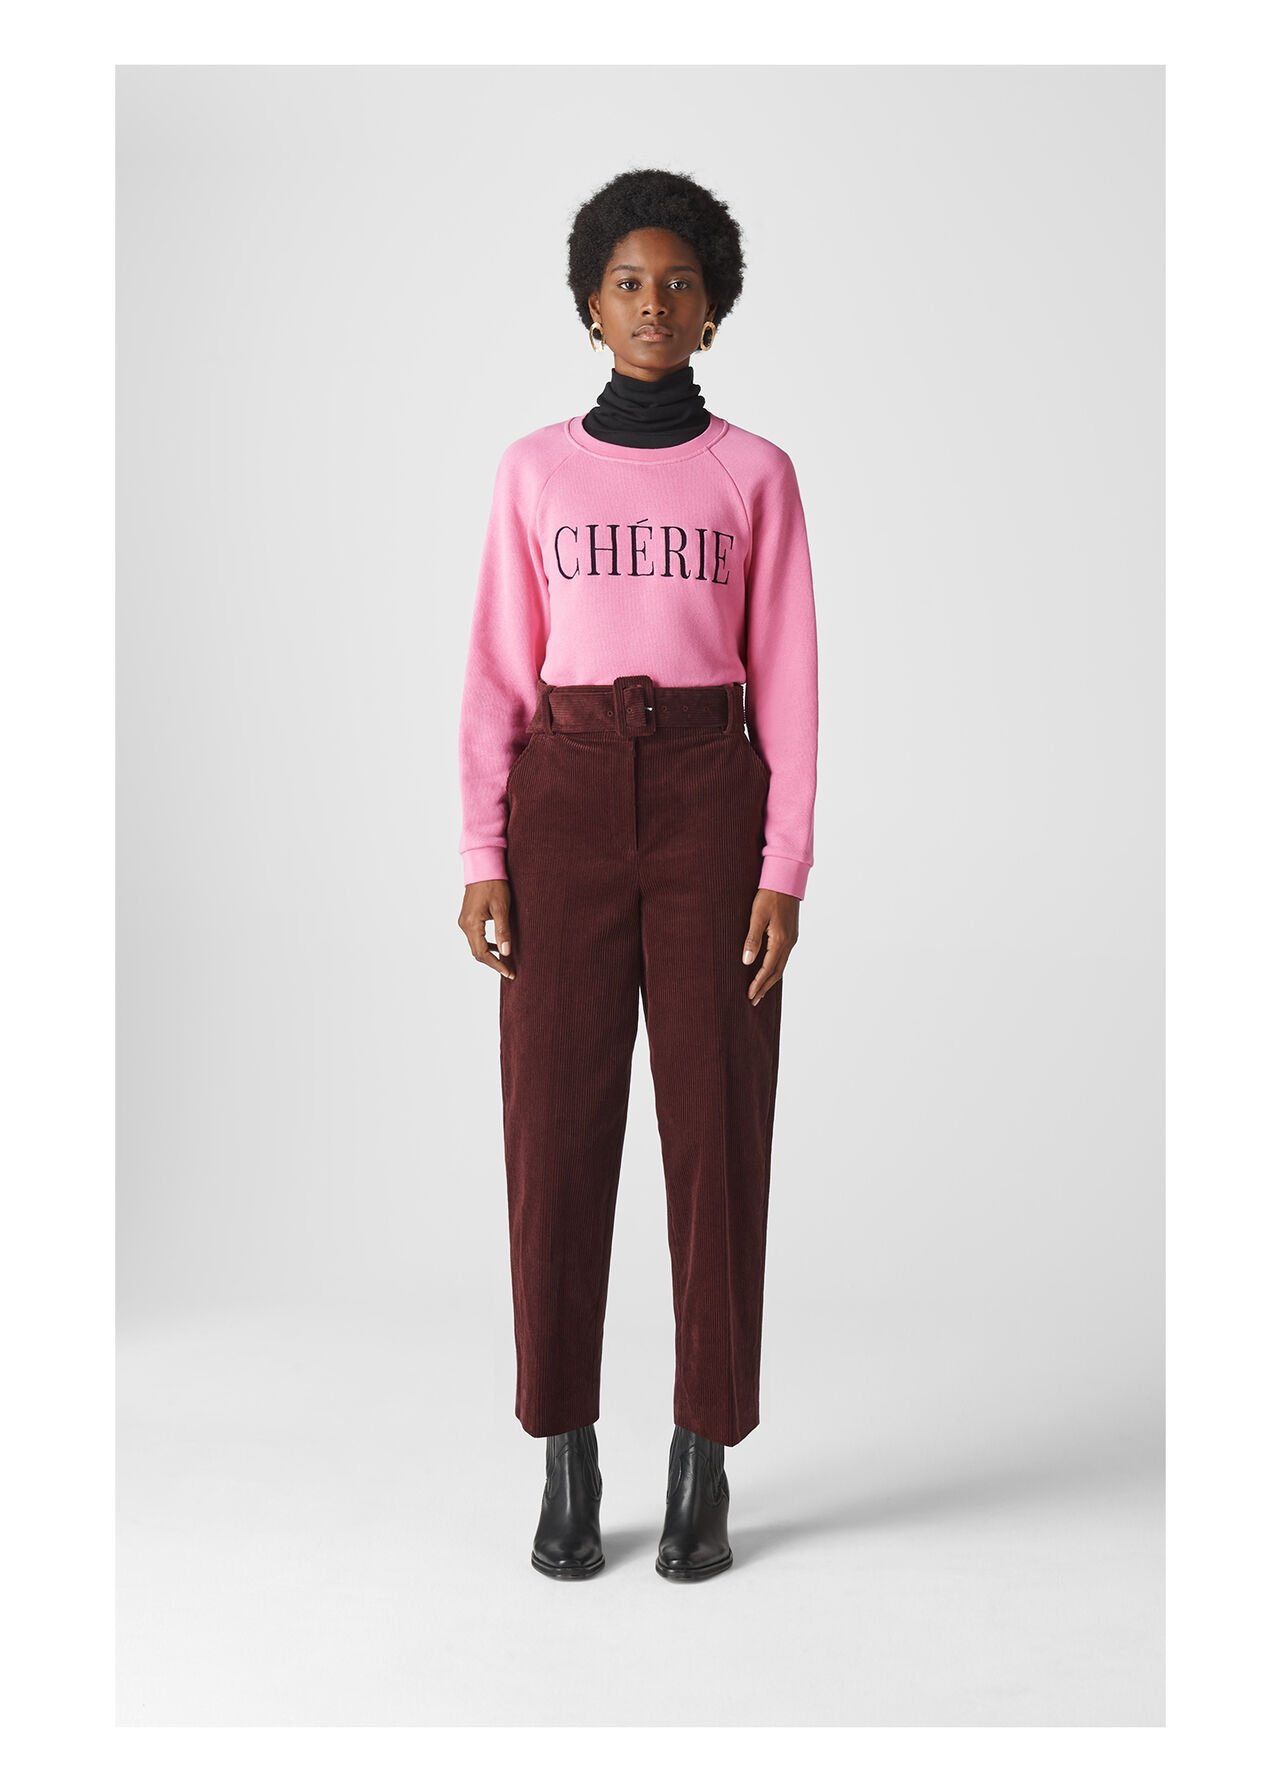 Cherie Embroidered Sweatshirt